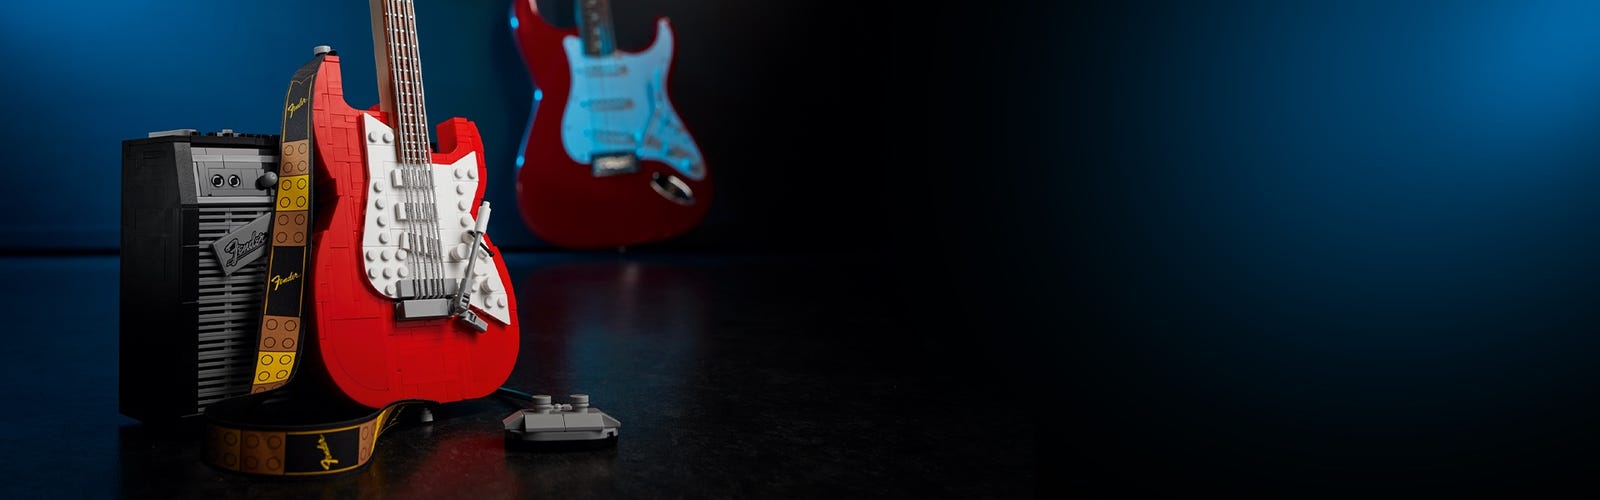 Lego Fender Stratocaster 21329 Light Kit(With Sound) – Briksmax